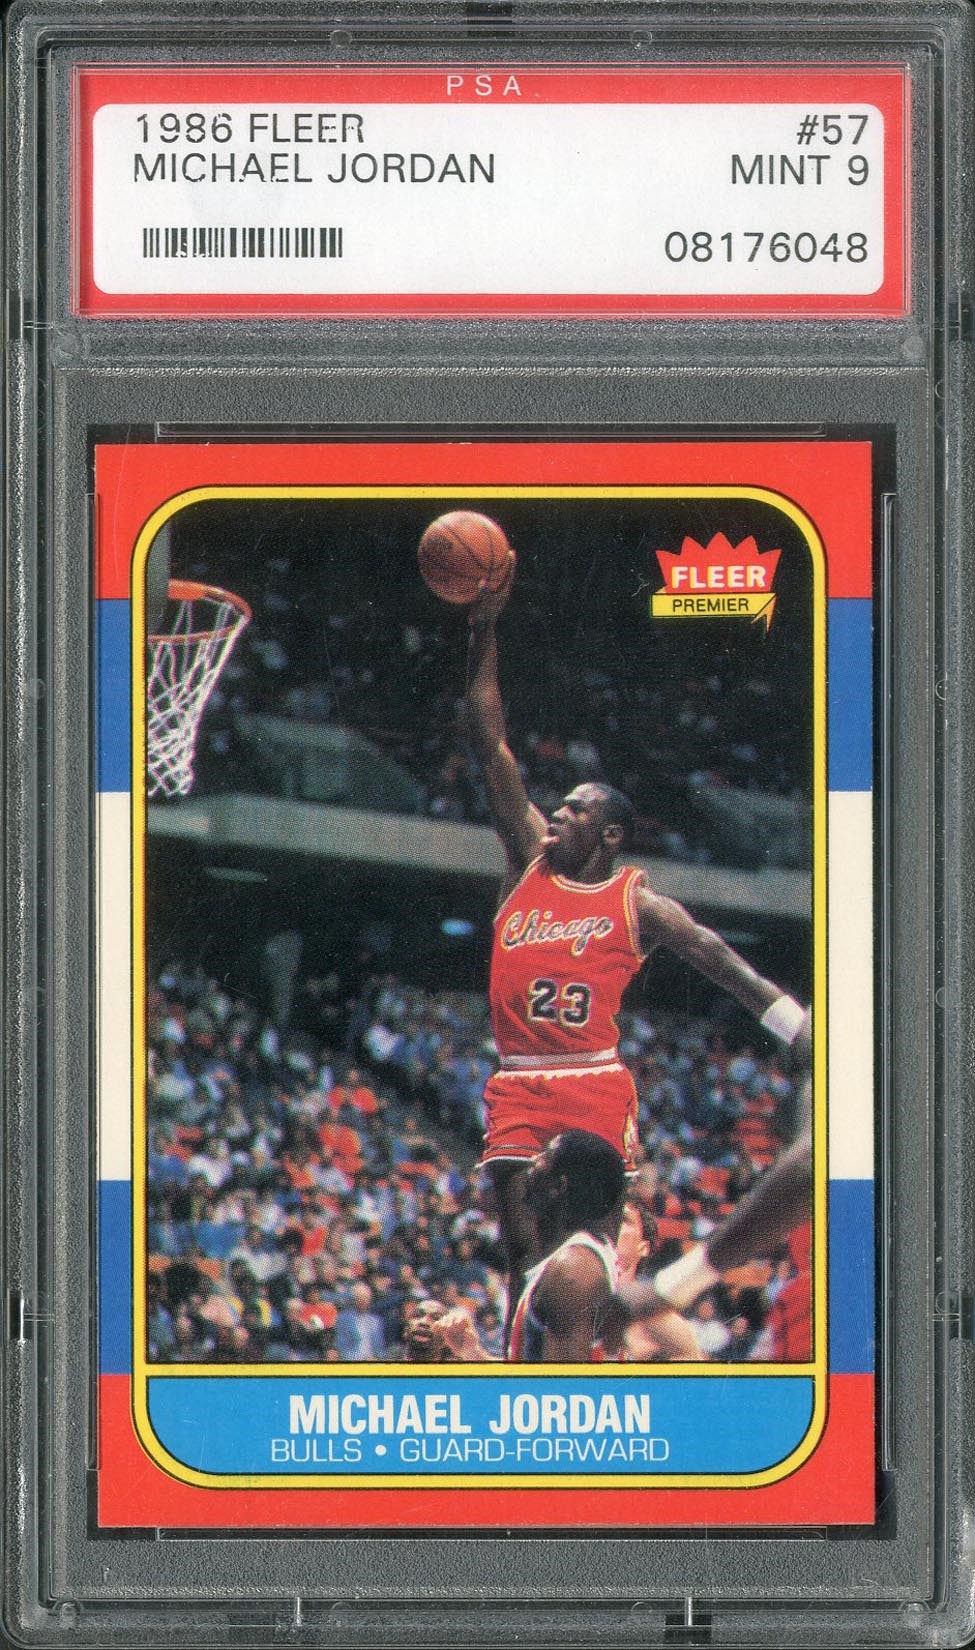 Basketball Cards - 1986 Fleer Michael Jordan #57 Rookie PSA MINT 9